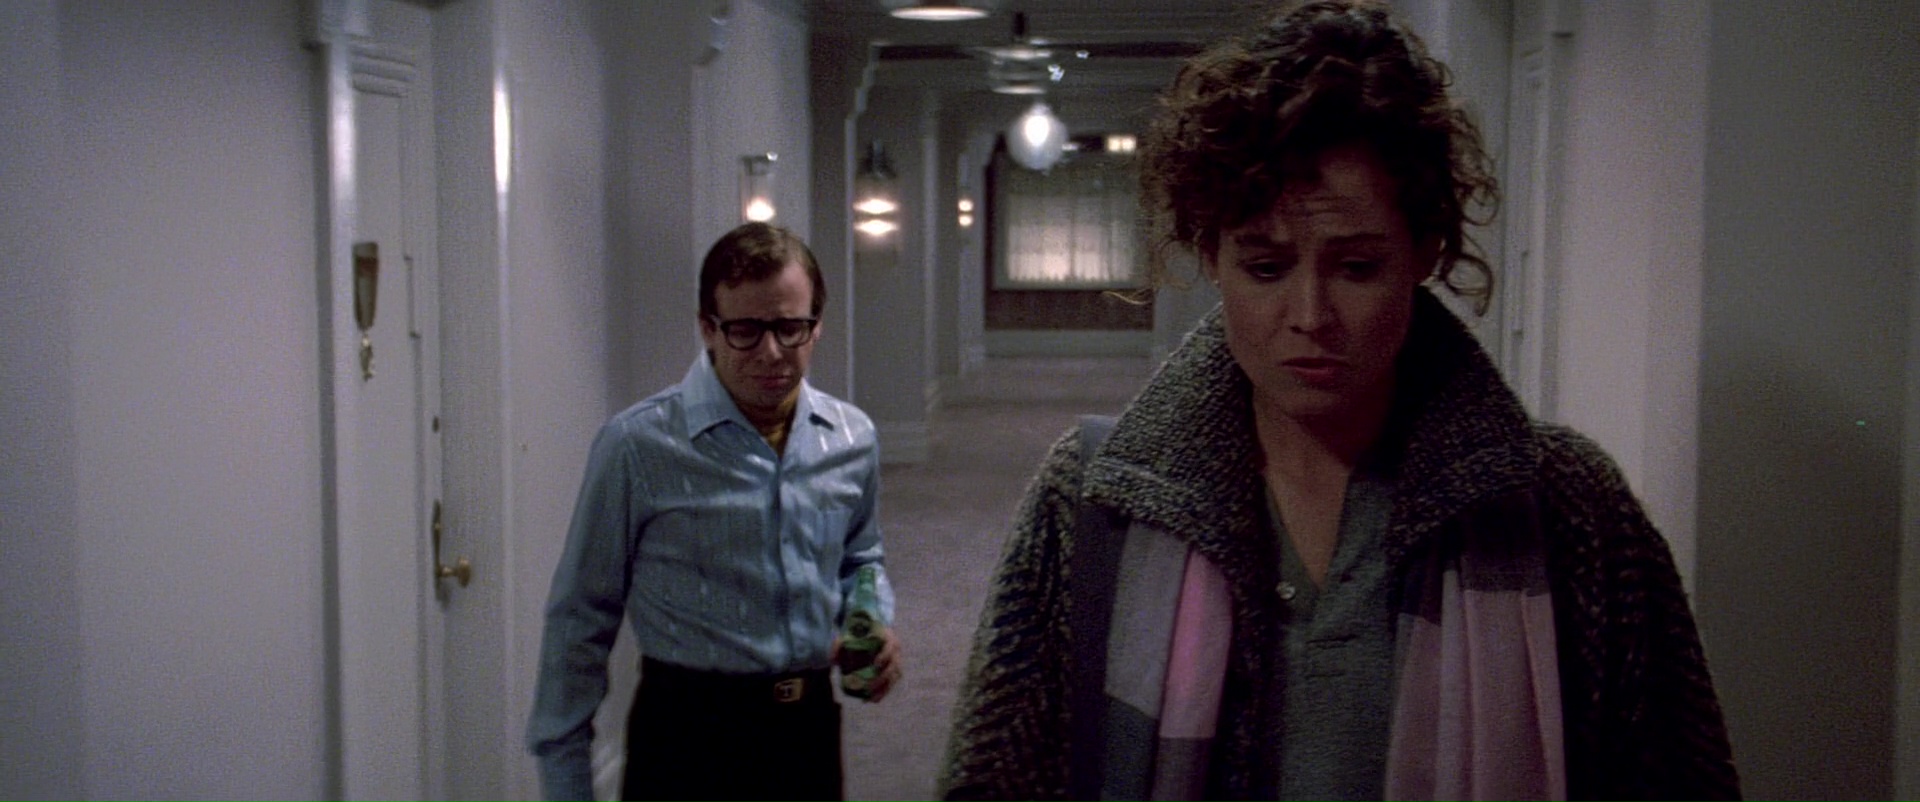 Perrier Water and Rick Moranis in Ghostbusters (1984) Movie